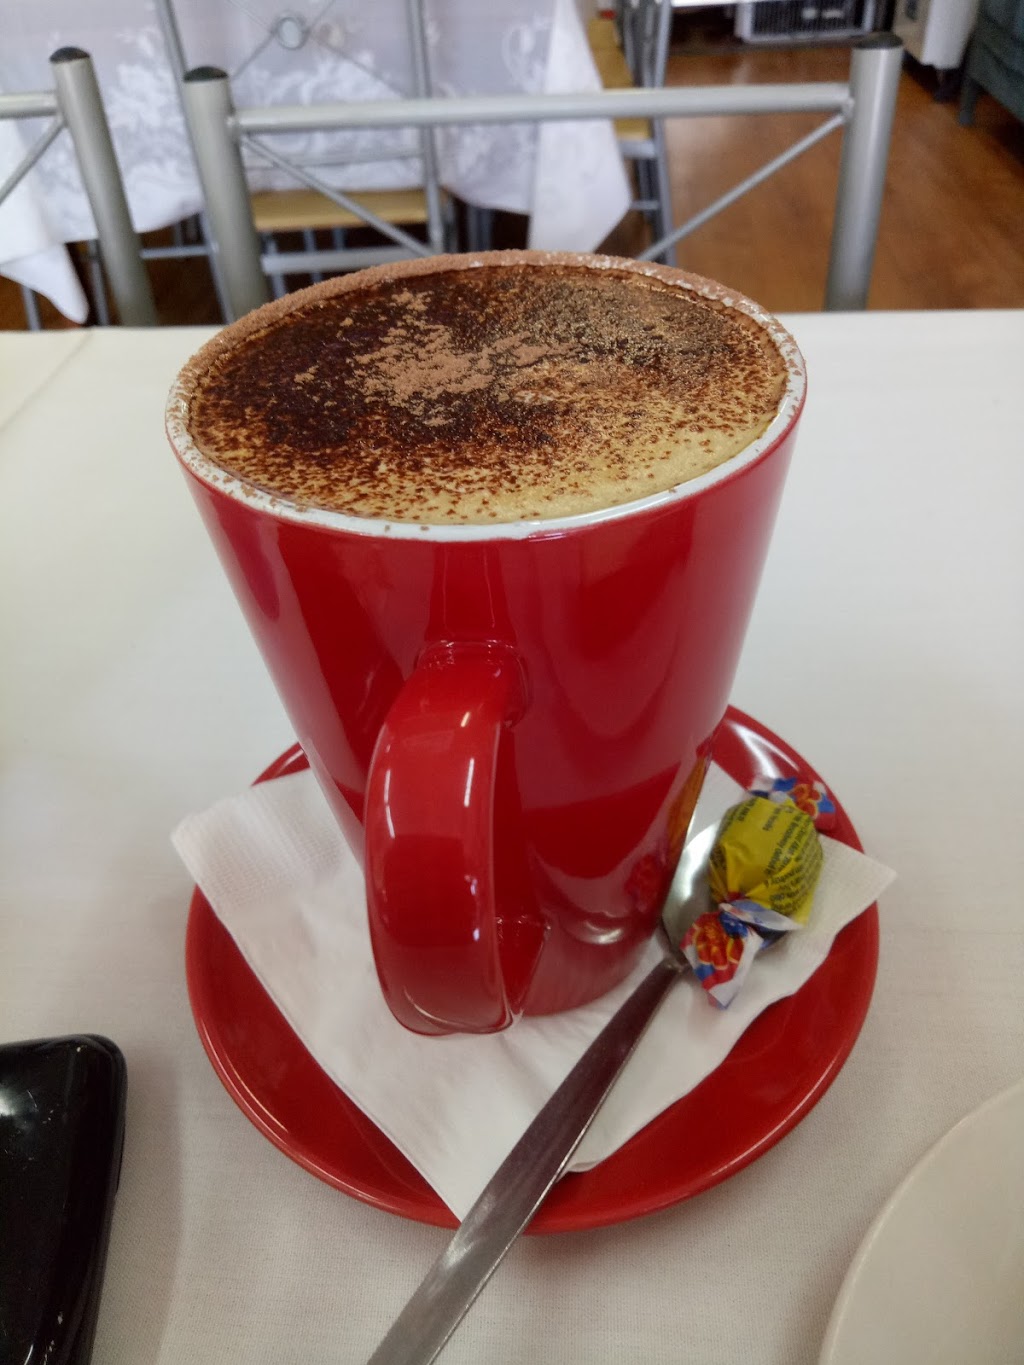 Tea On The Terrace | 2/18 River St, Maclean NSW 2463, Australia | Phone: (02) 6645 3033